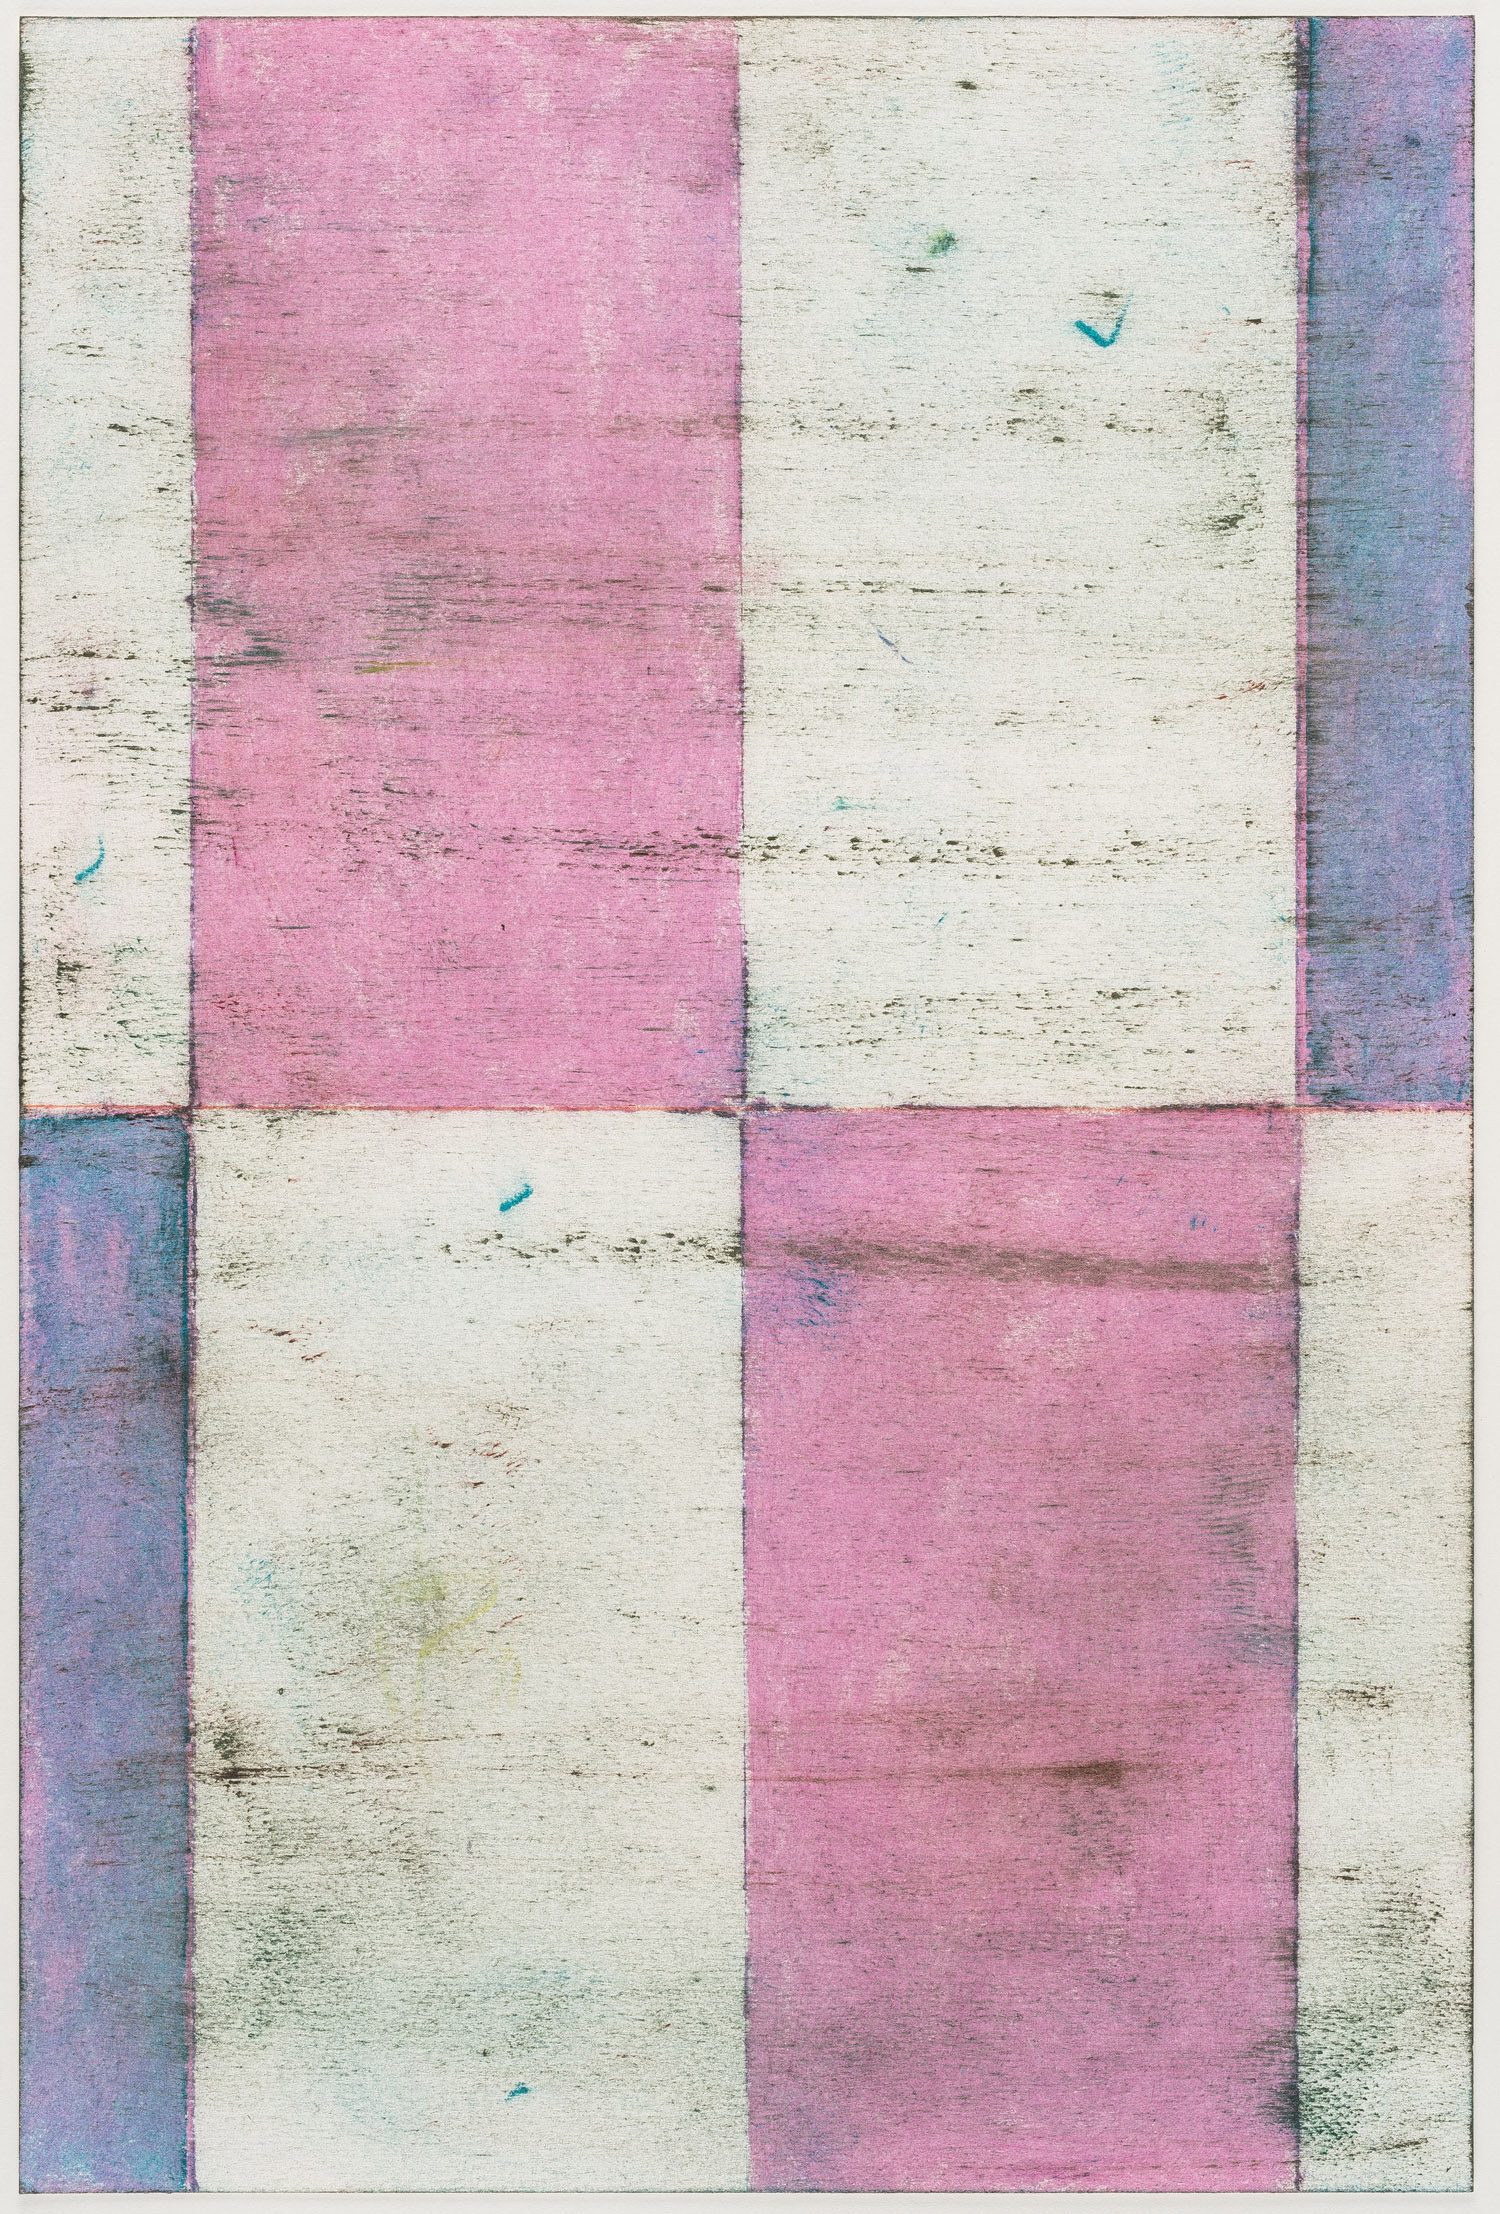 Pius Fox - Untitled (PF 17-035) Oil pastel on paper 39 x 26 cm 2017